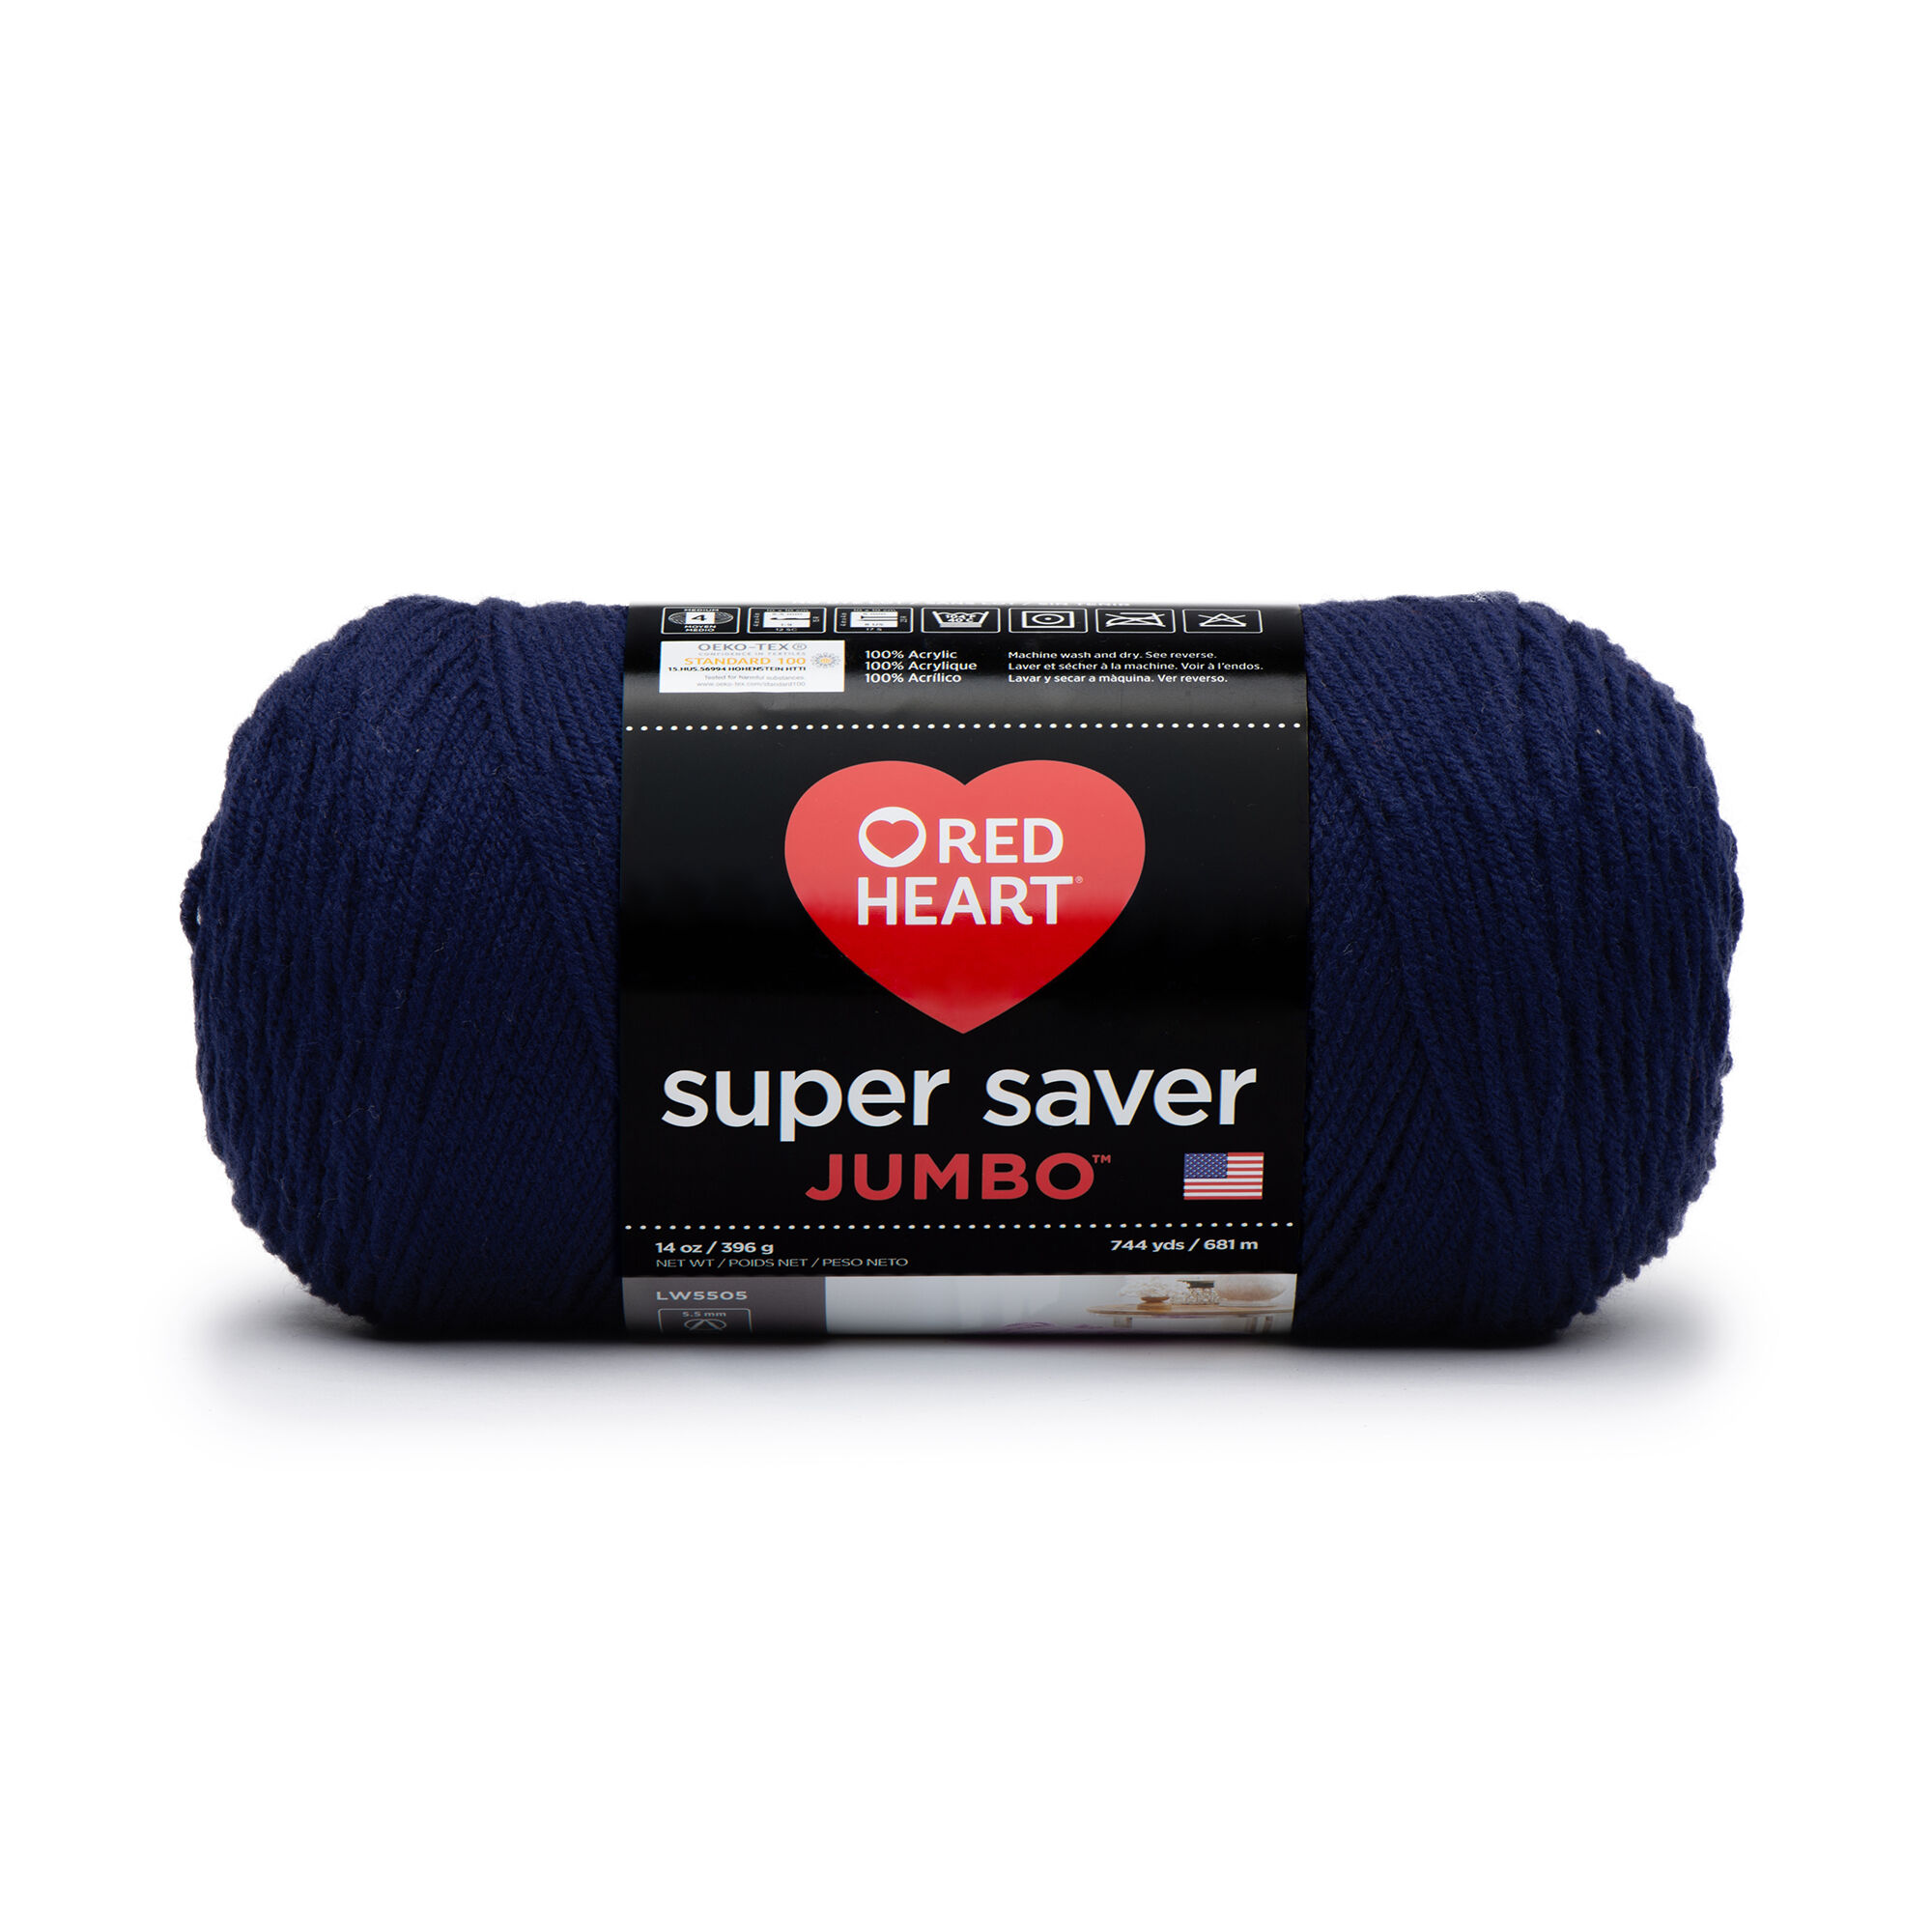 Red Heart Super Saver Jumbo #4 Medium Acrylic Yarn, Soft Navy 14oz/396g, 744 Yards - image 1 of 16